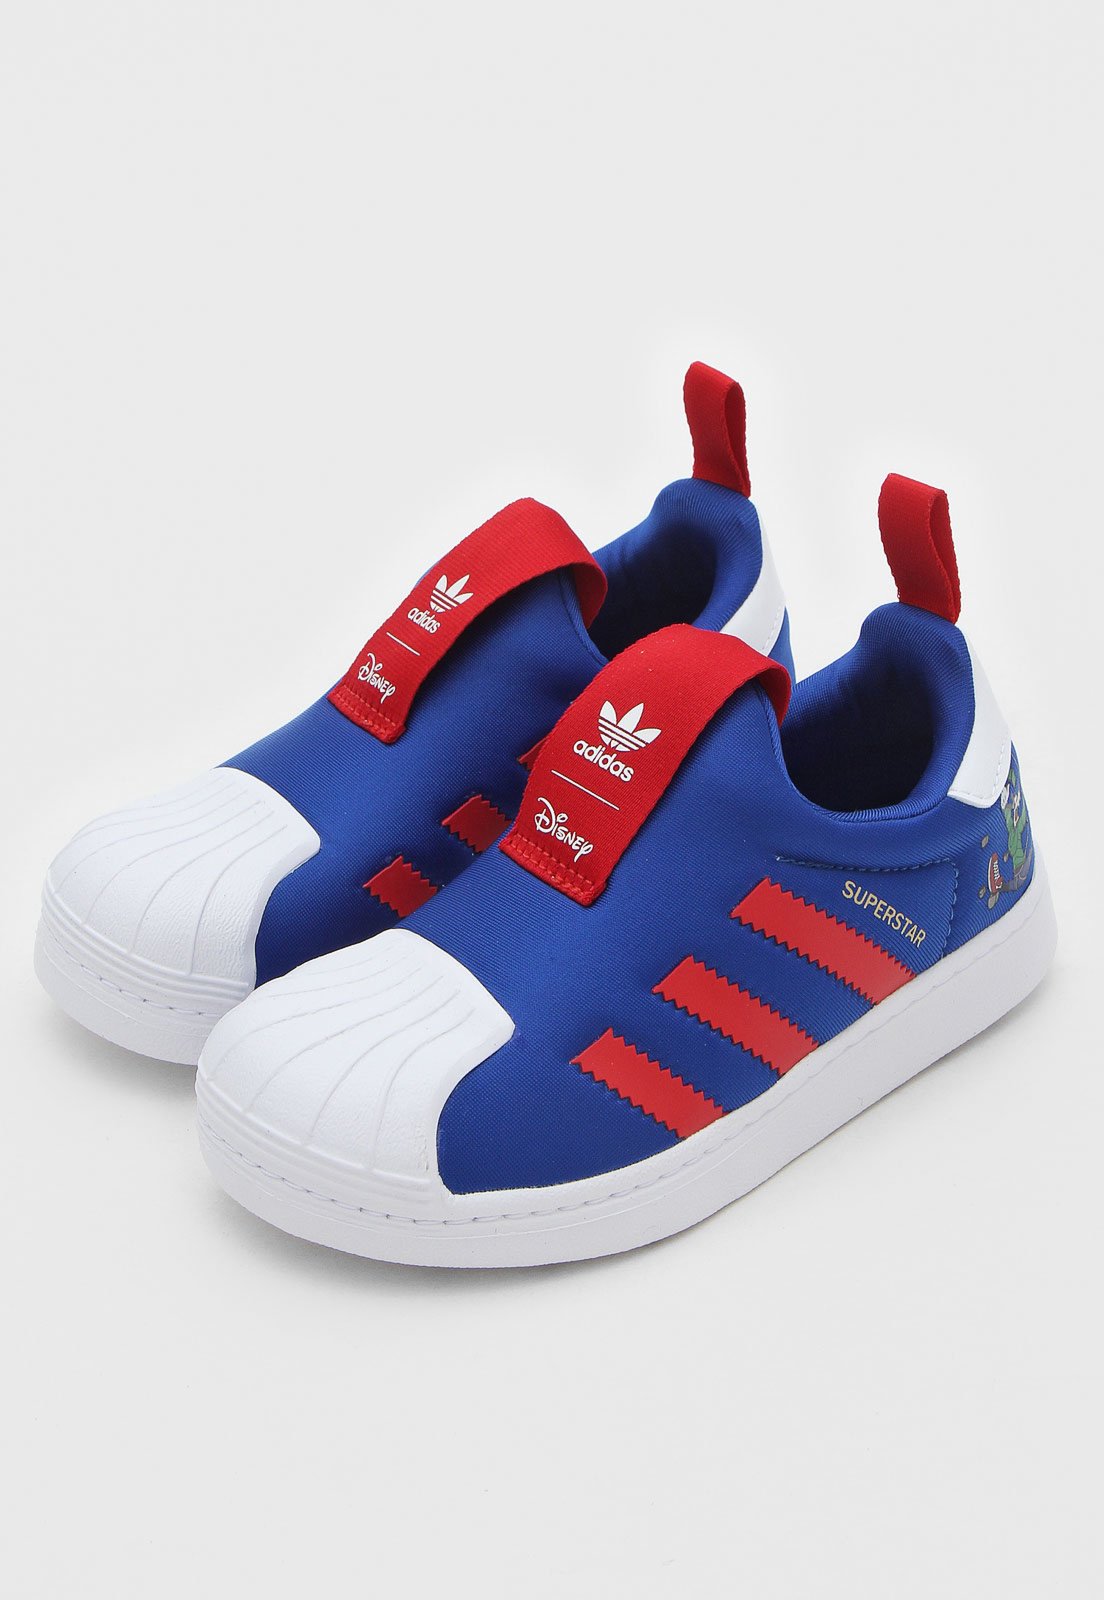 Fabi Store - Adidas Super Star - Infantil Número 24- a pronta entrega 💰  79,90